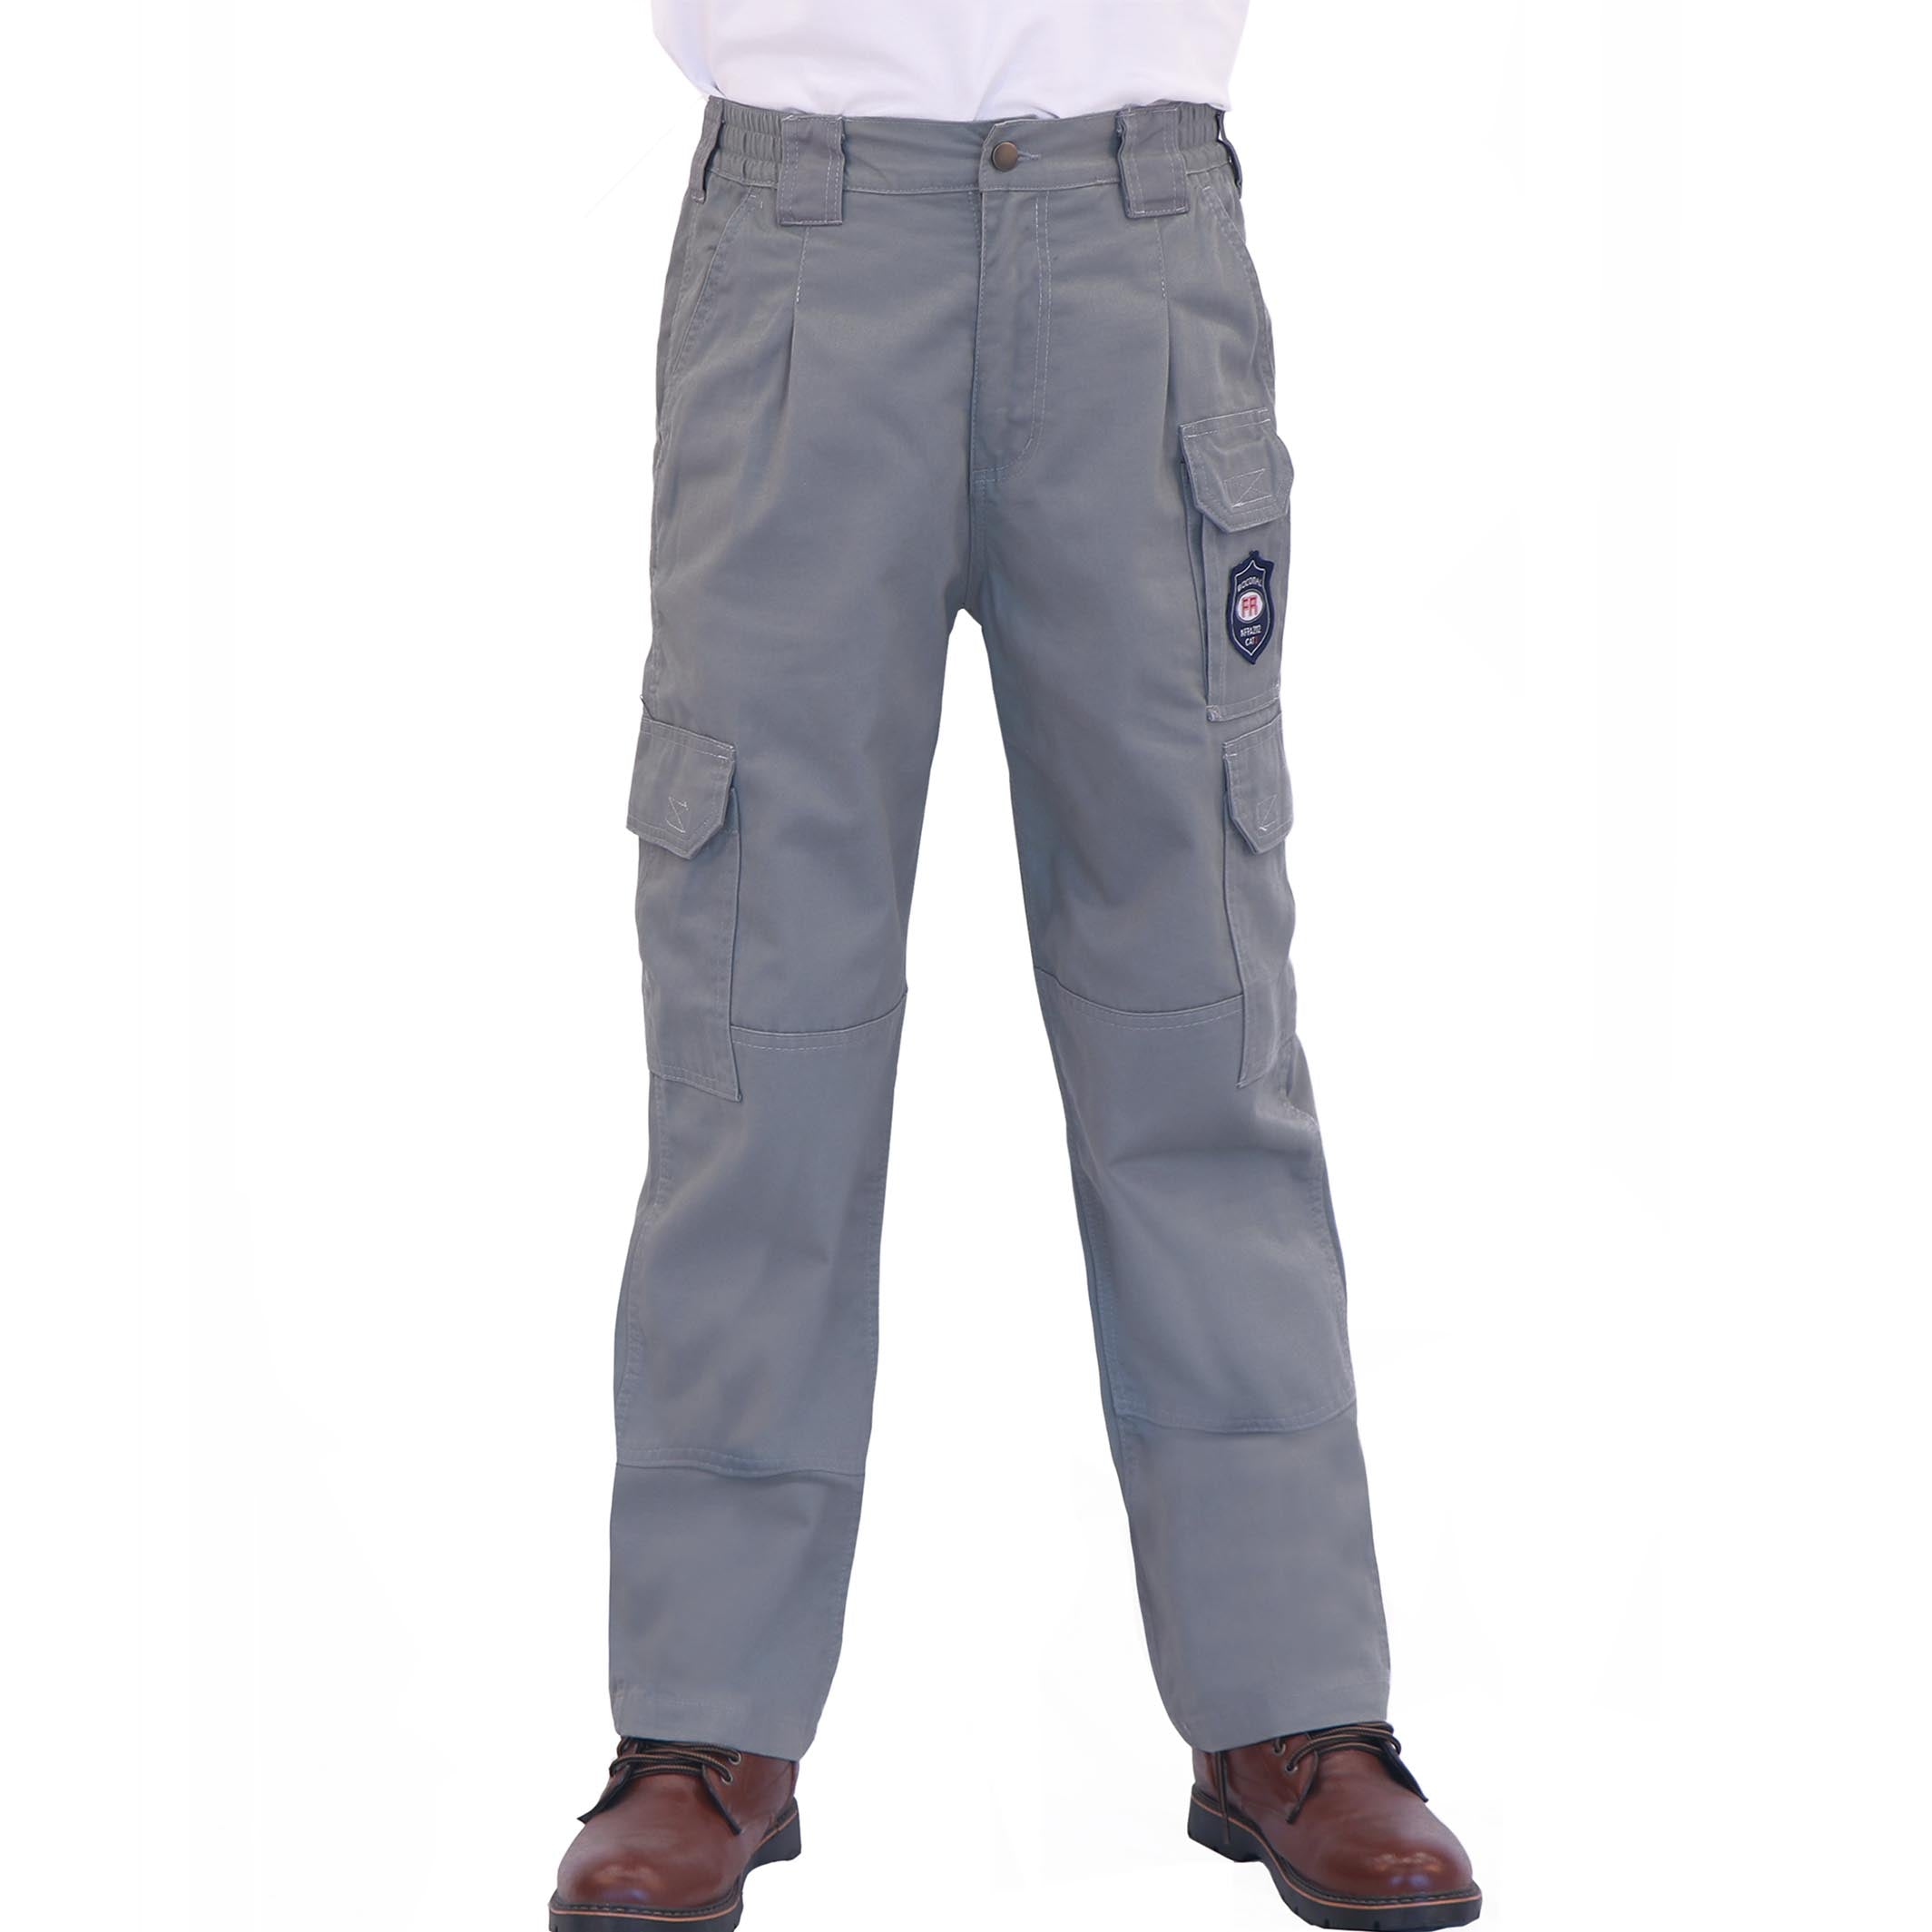 BOCOMAL FR Cargo Pants(multiple pockets) 7.5OZ Lightweight Work